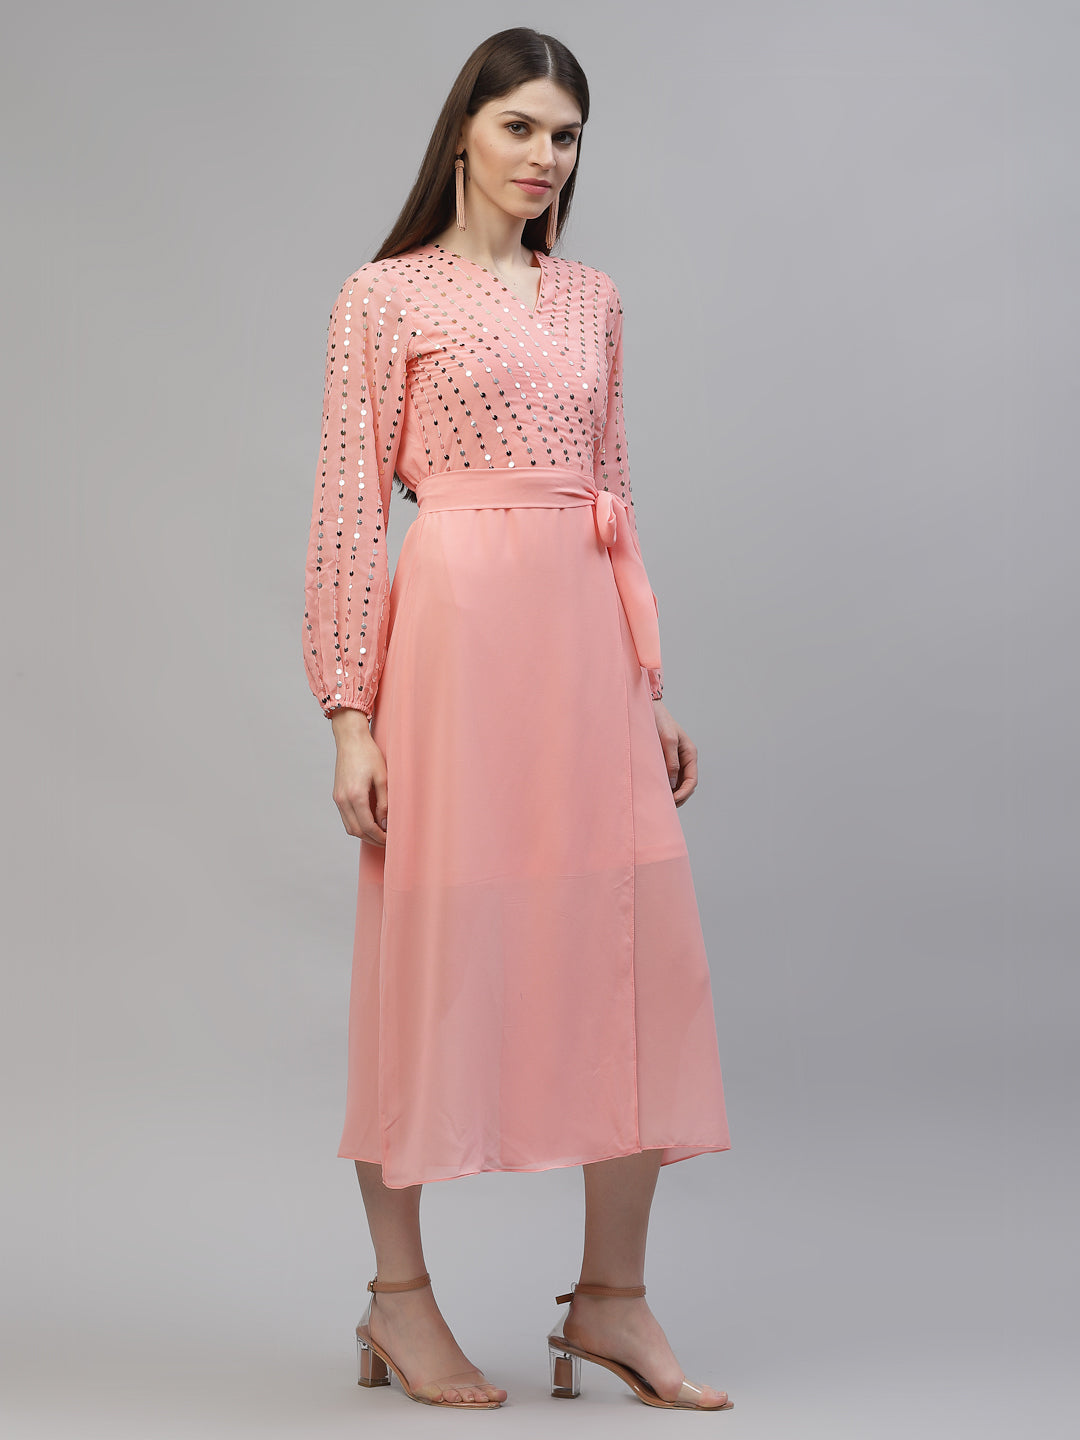 Athena Women Pink Solid A-Line Dress - Athena Lifestyle